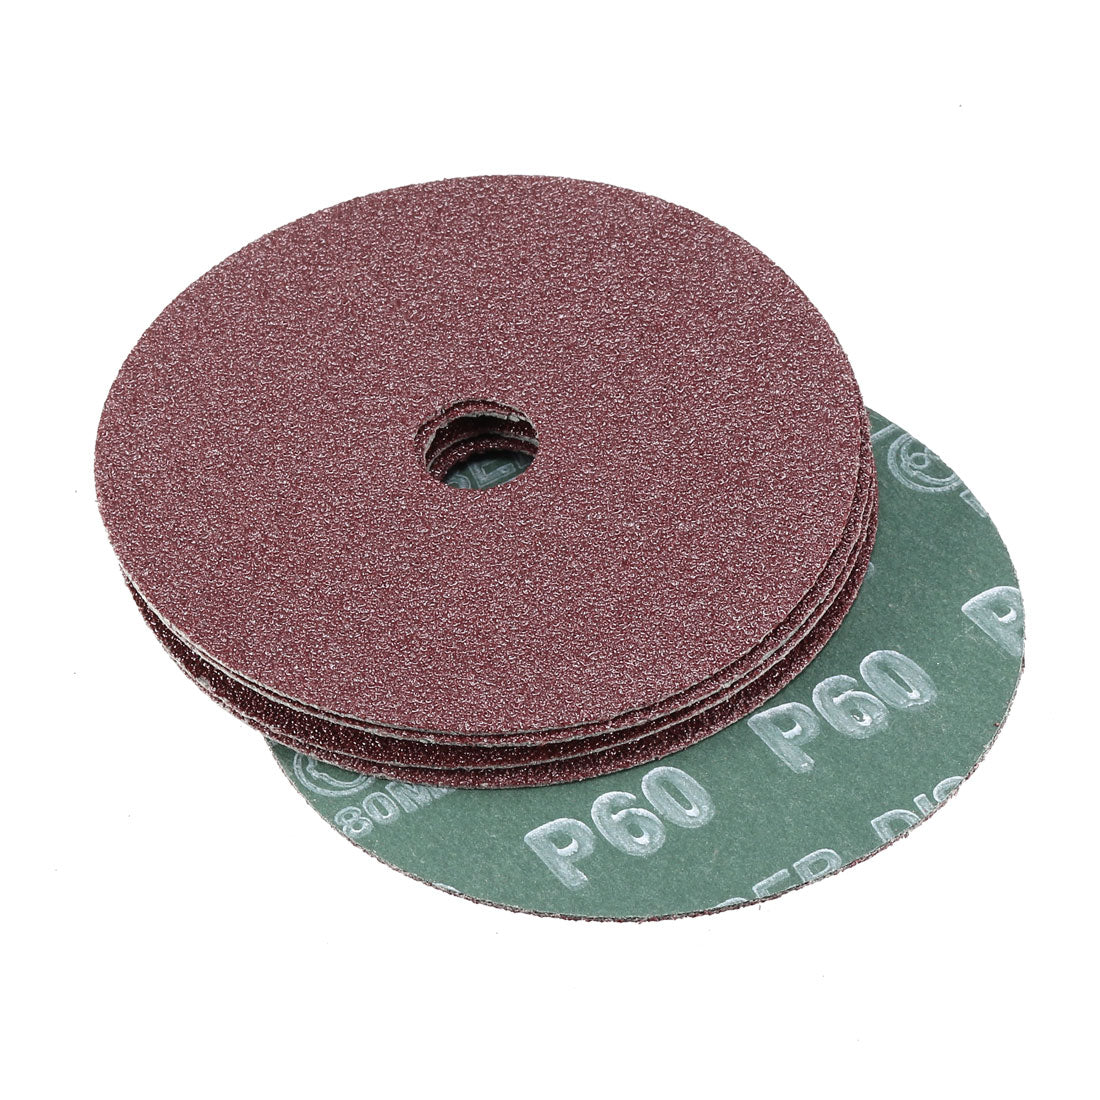 Uxcell Uxcell 4-Inch x 5/8-Inch Aluminum Oxide Resin Fiber Discs, Center Hole 120 Grit Sanding Grinding Discs, 15 Pcs